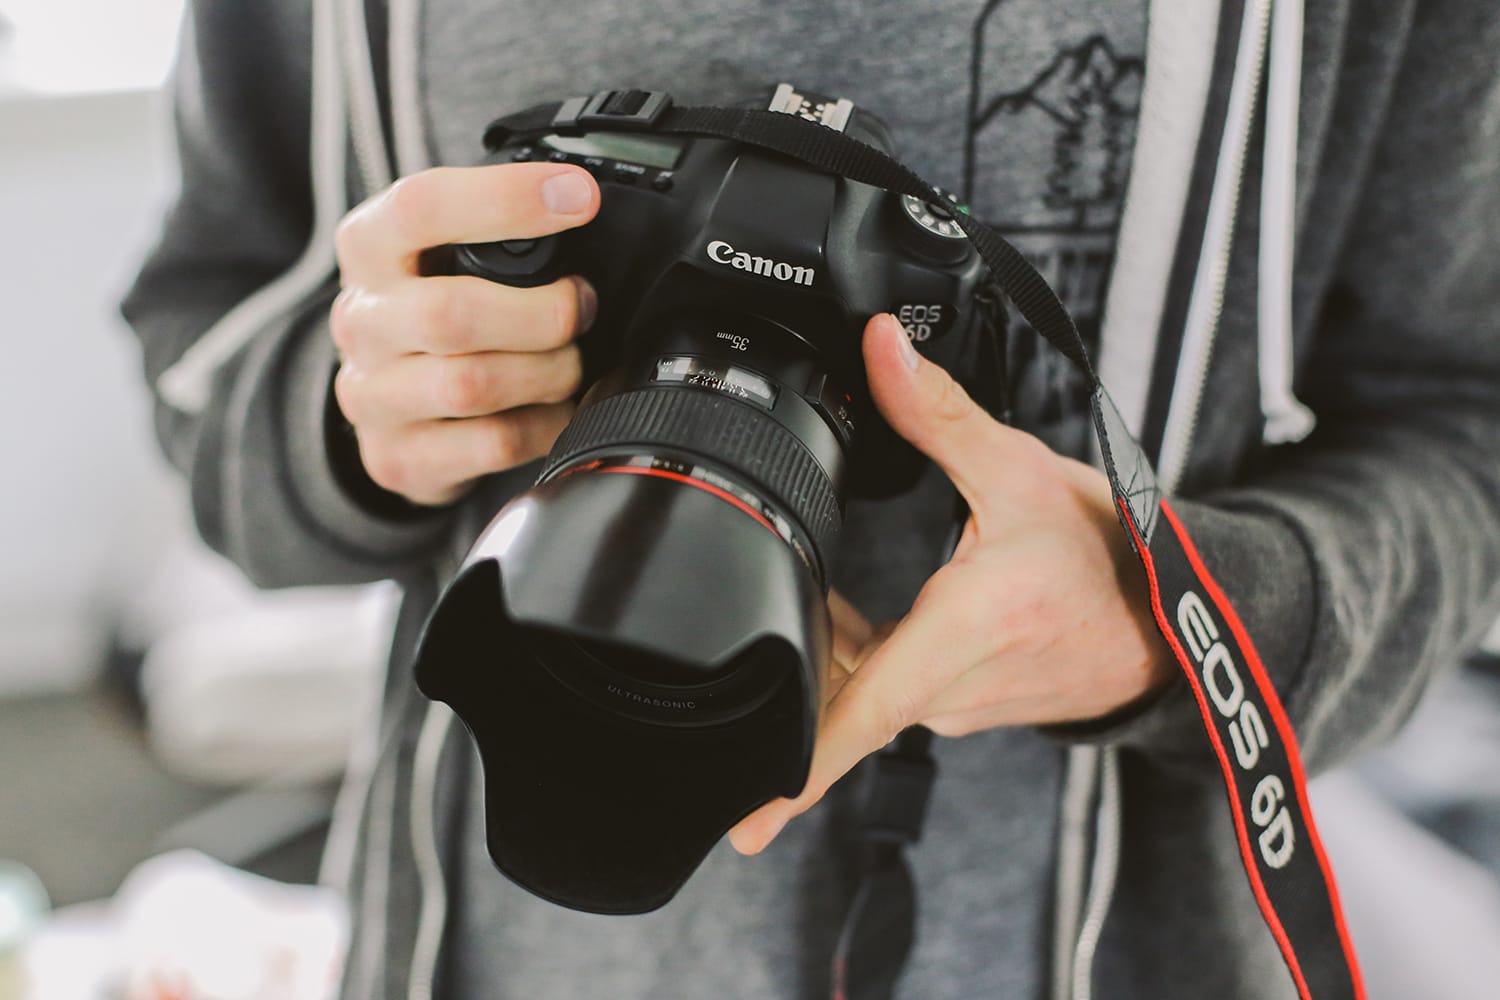 Photographer Camera